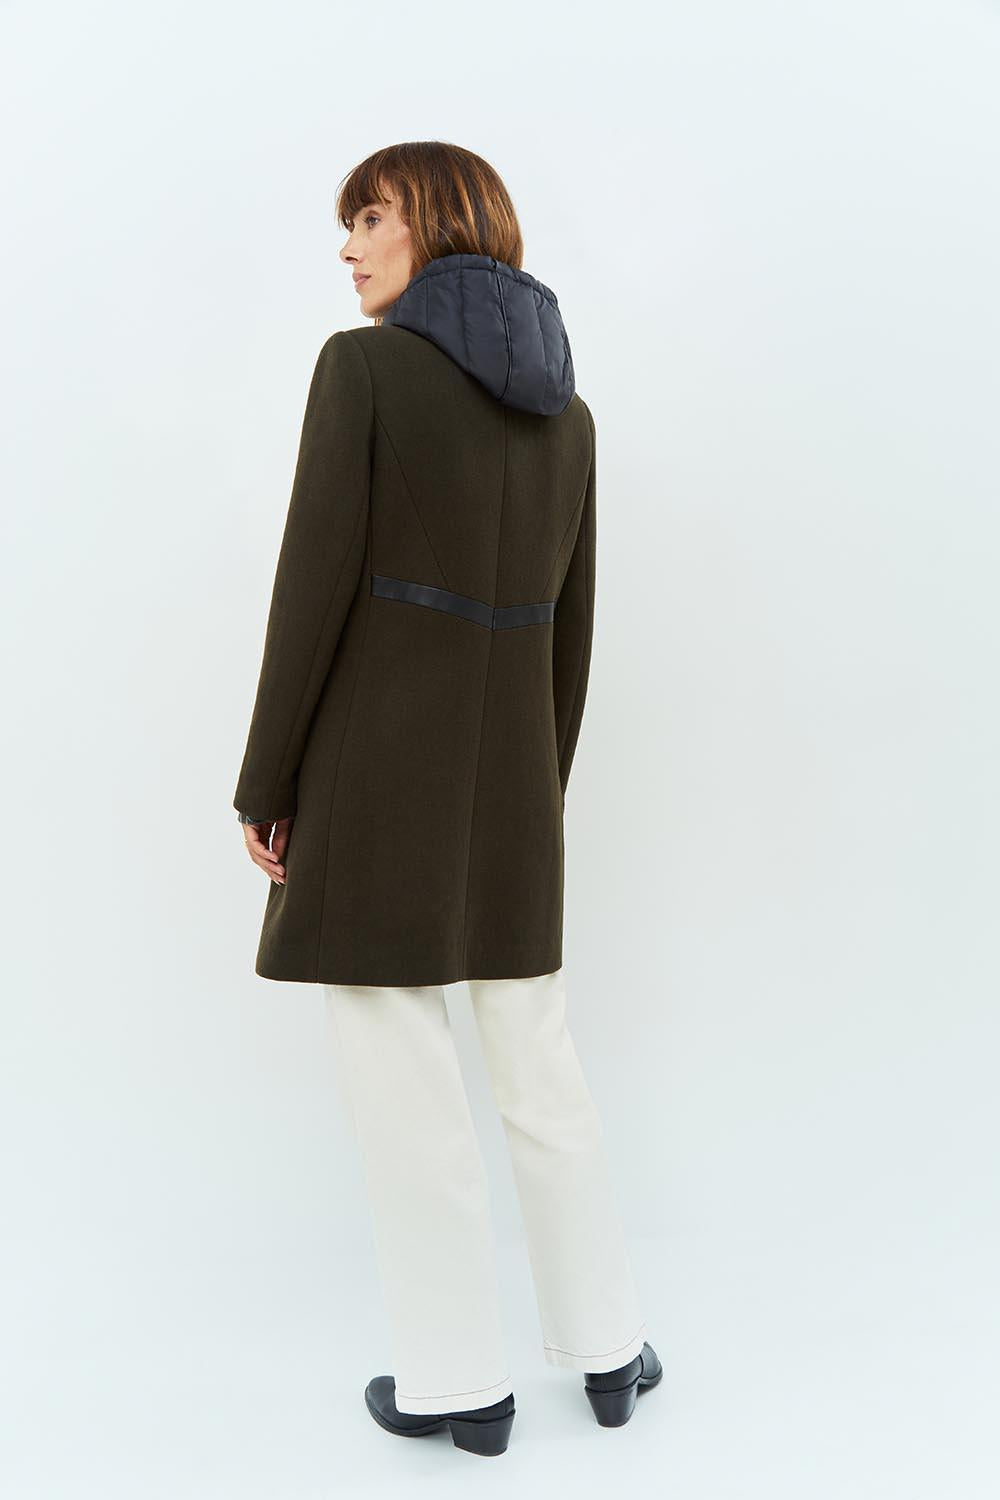 DIDA - Manteau kaki avec col cuir synthétique noir